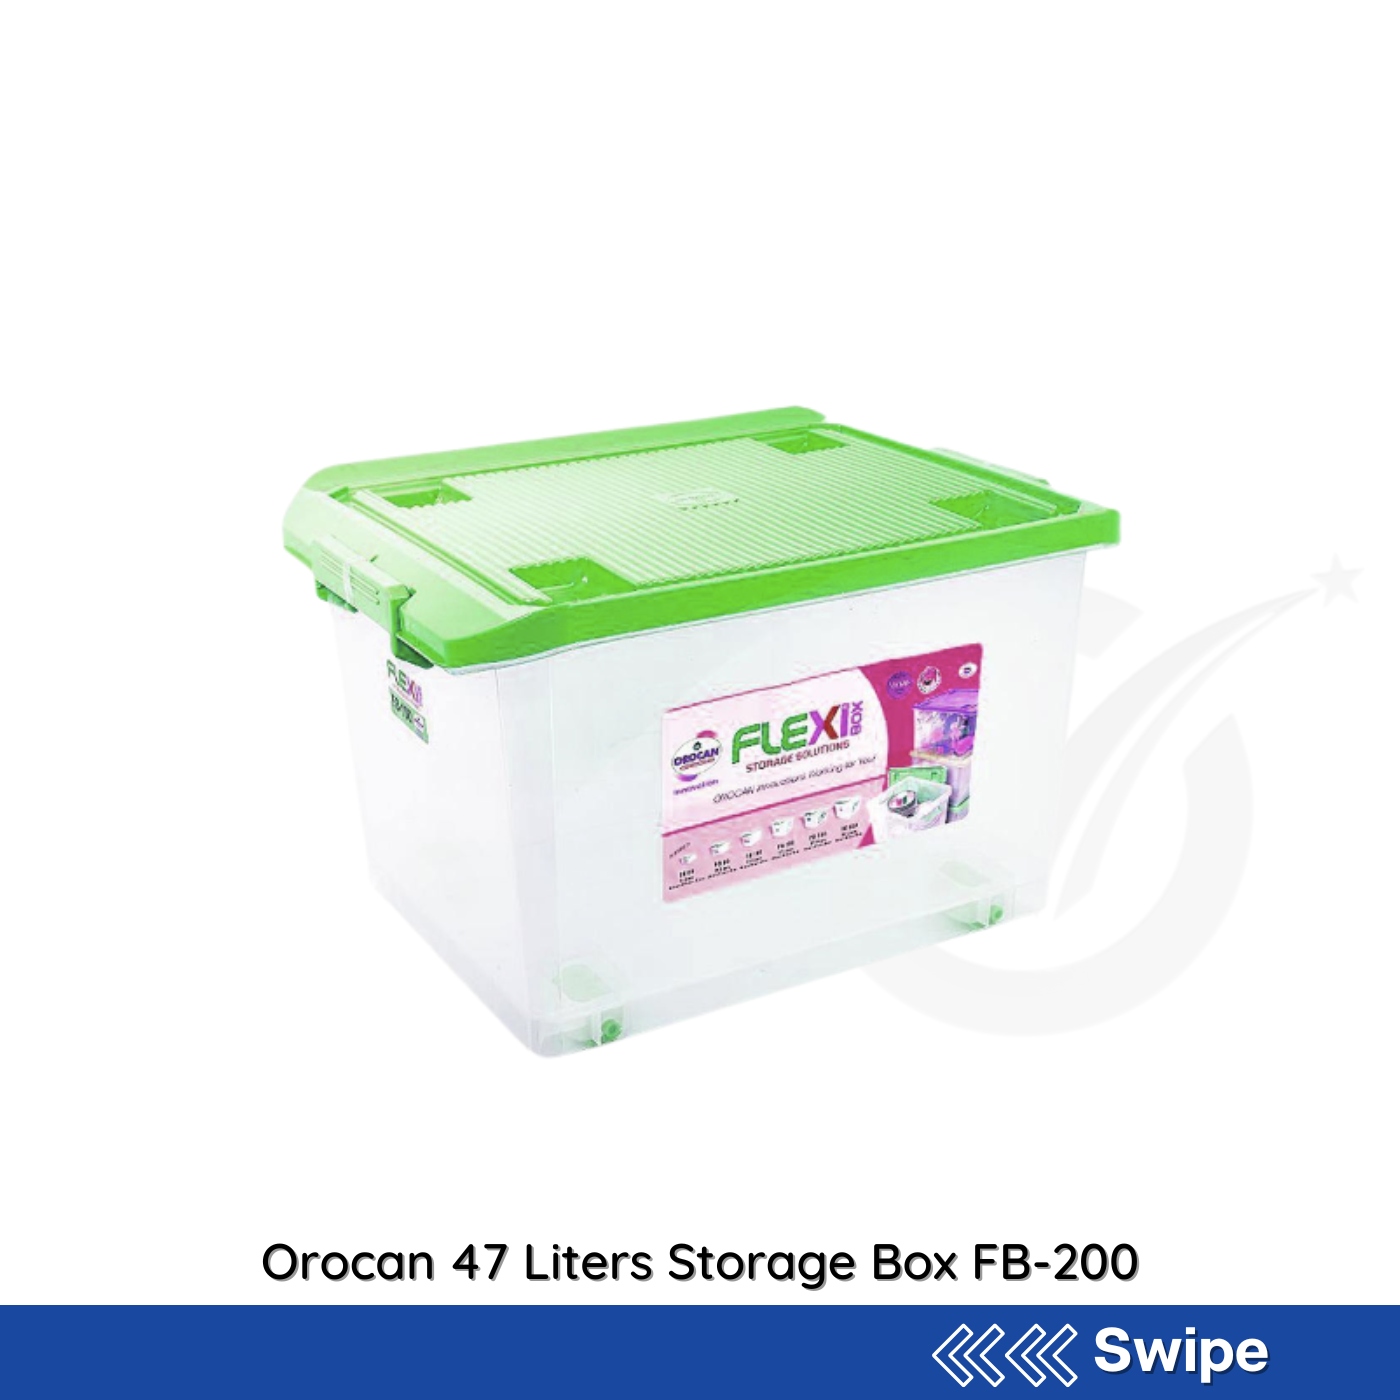 Orocan 47 Liters Storage Box FB-200 - People's Choice Marketing